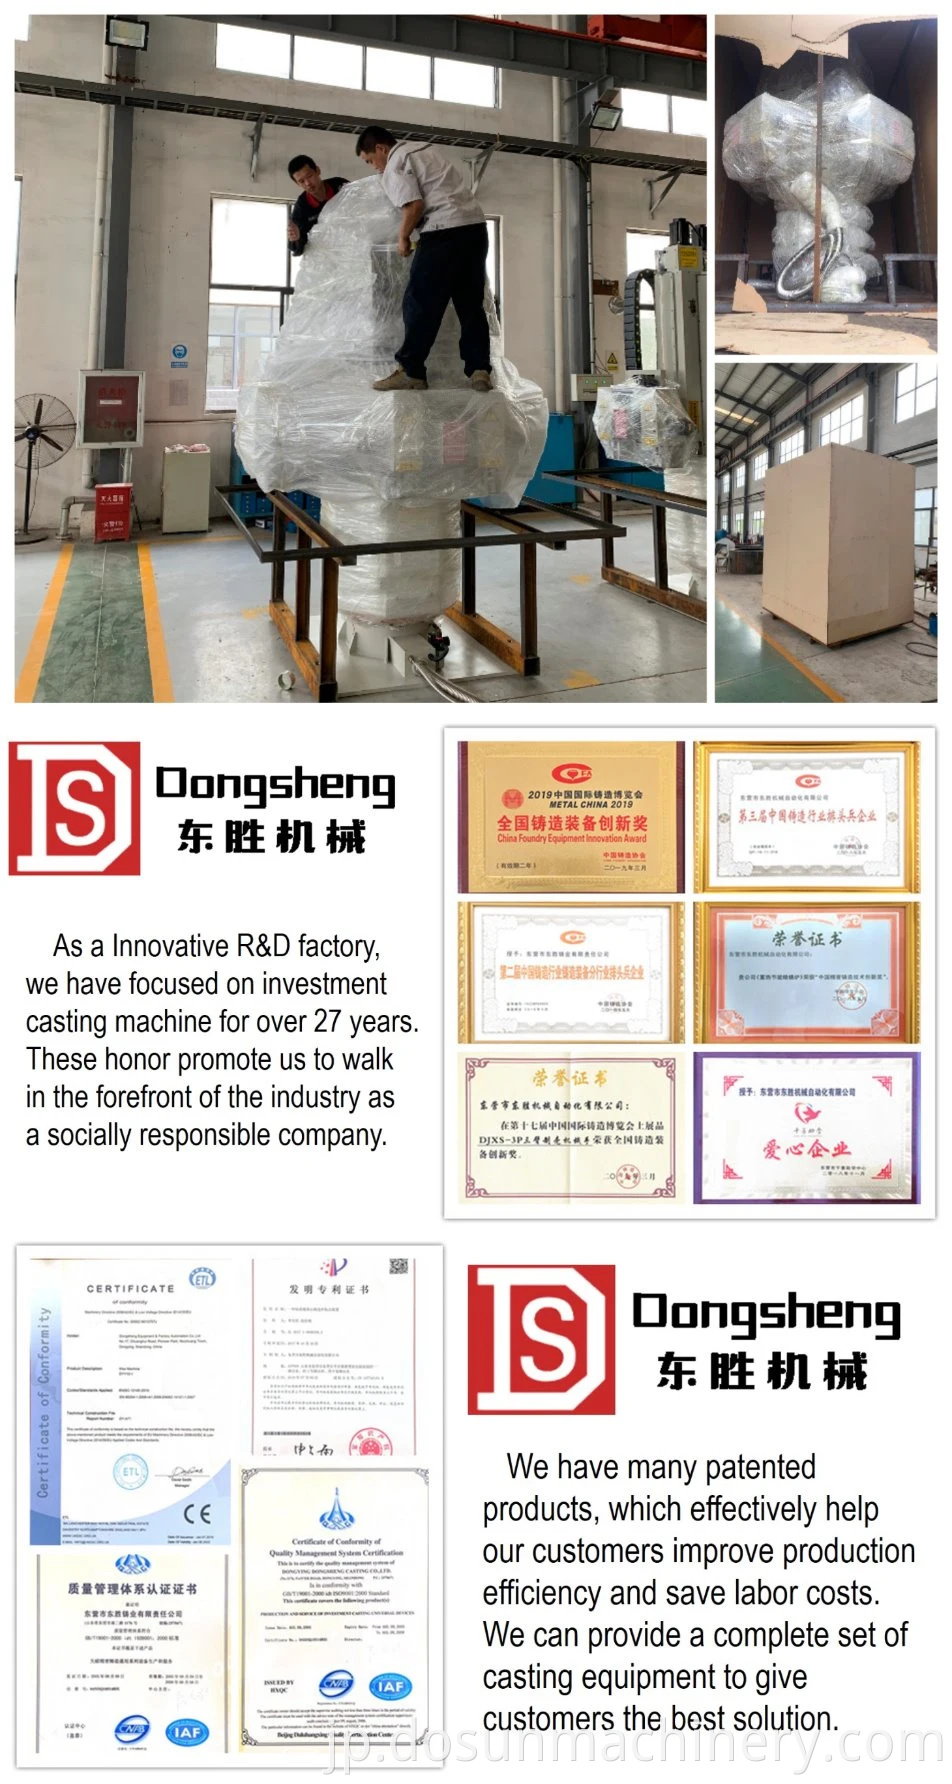 ISO9001を使用したDongsheng鋳造C型ワックス注入